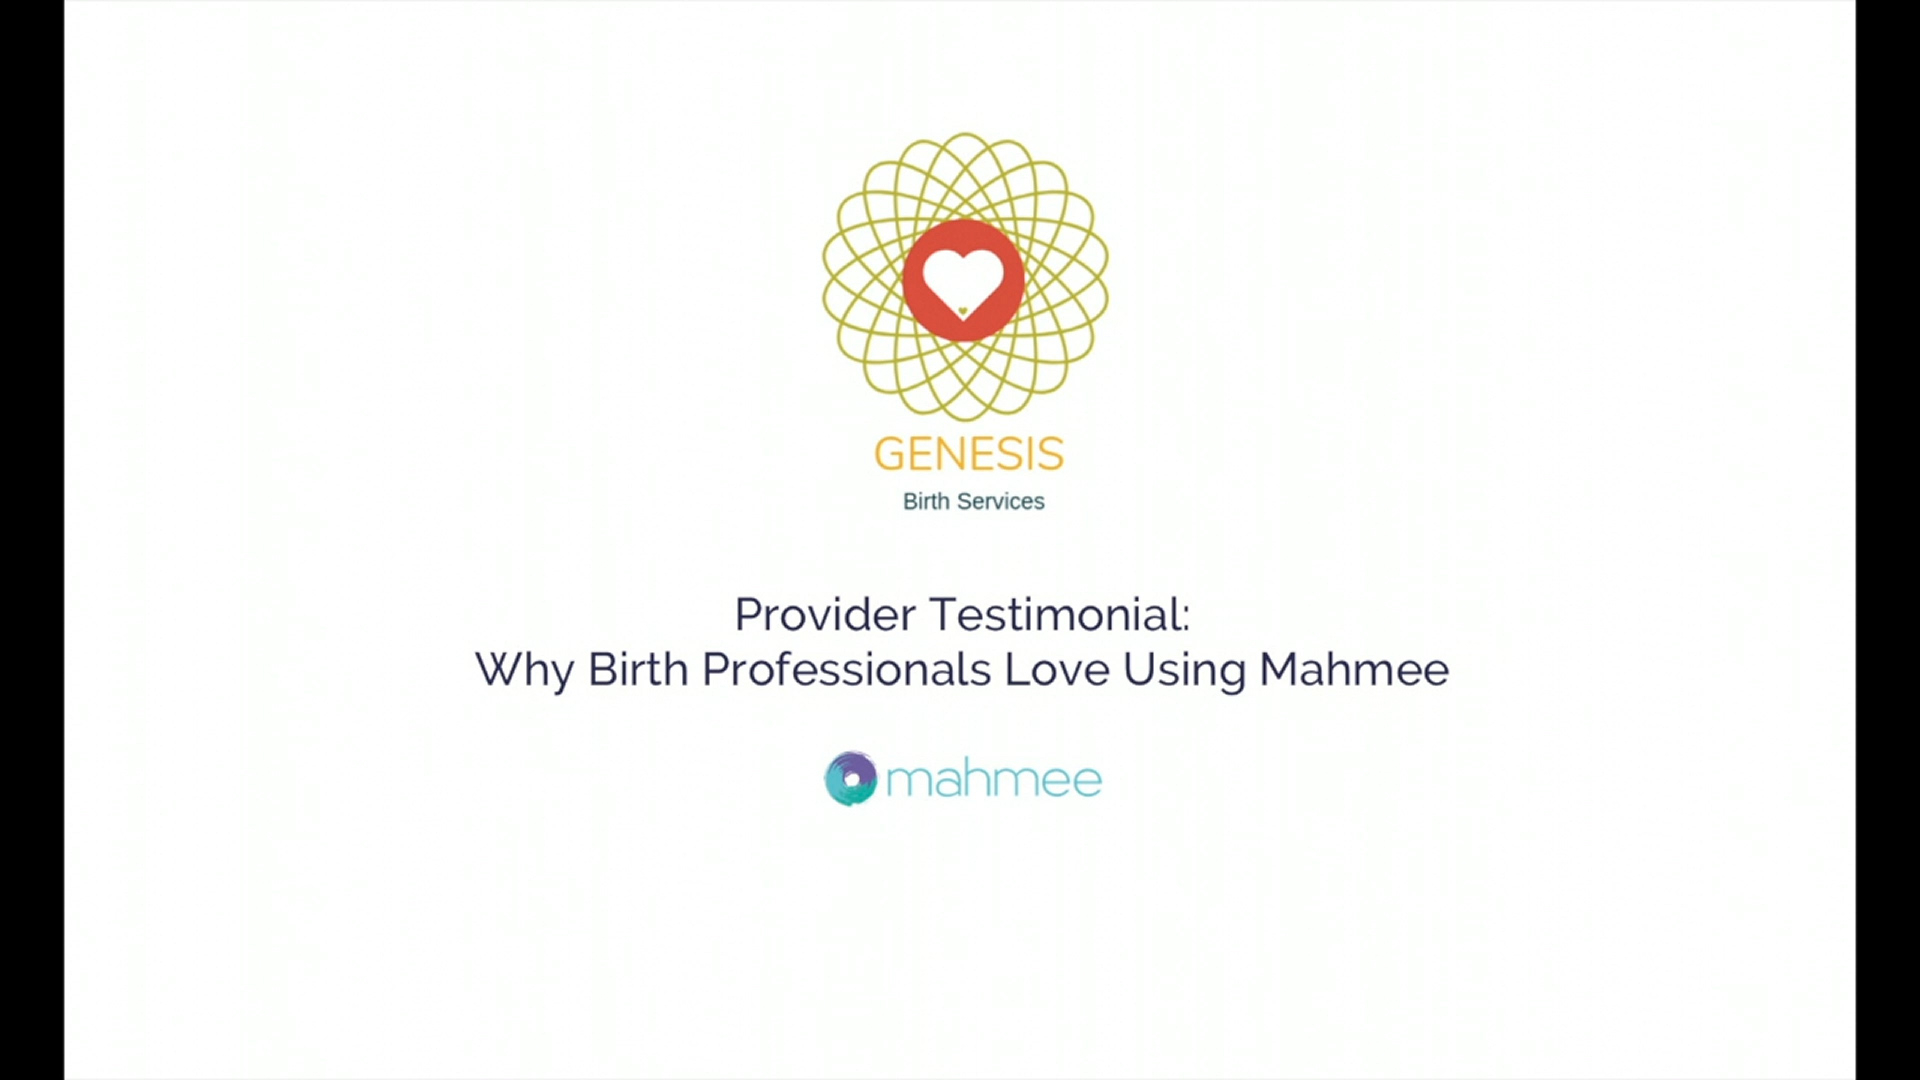 Provider testimonial: Why Birth Professionals Love Using Mahmee